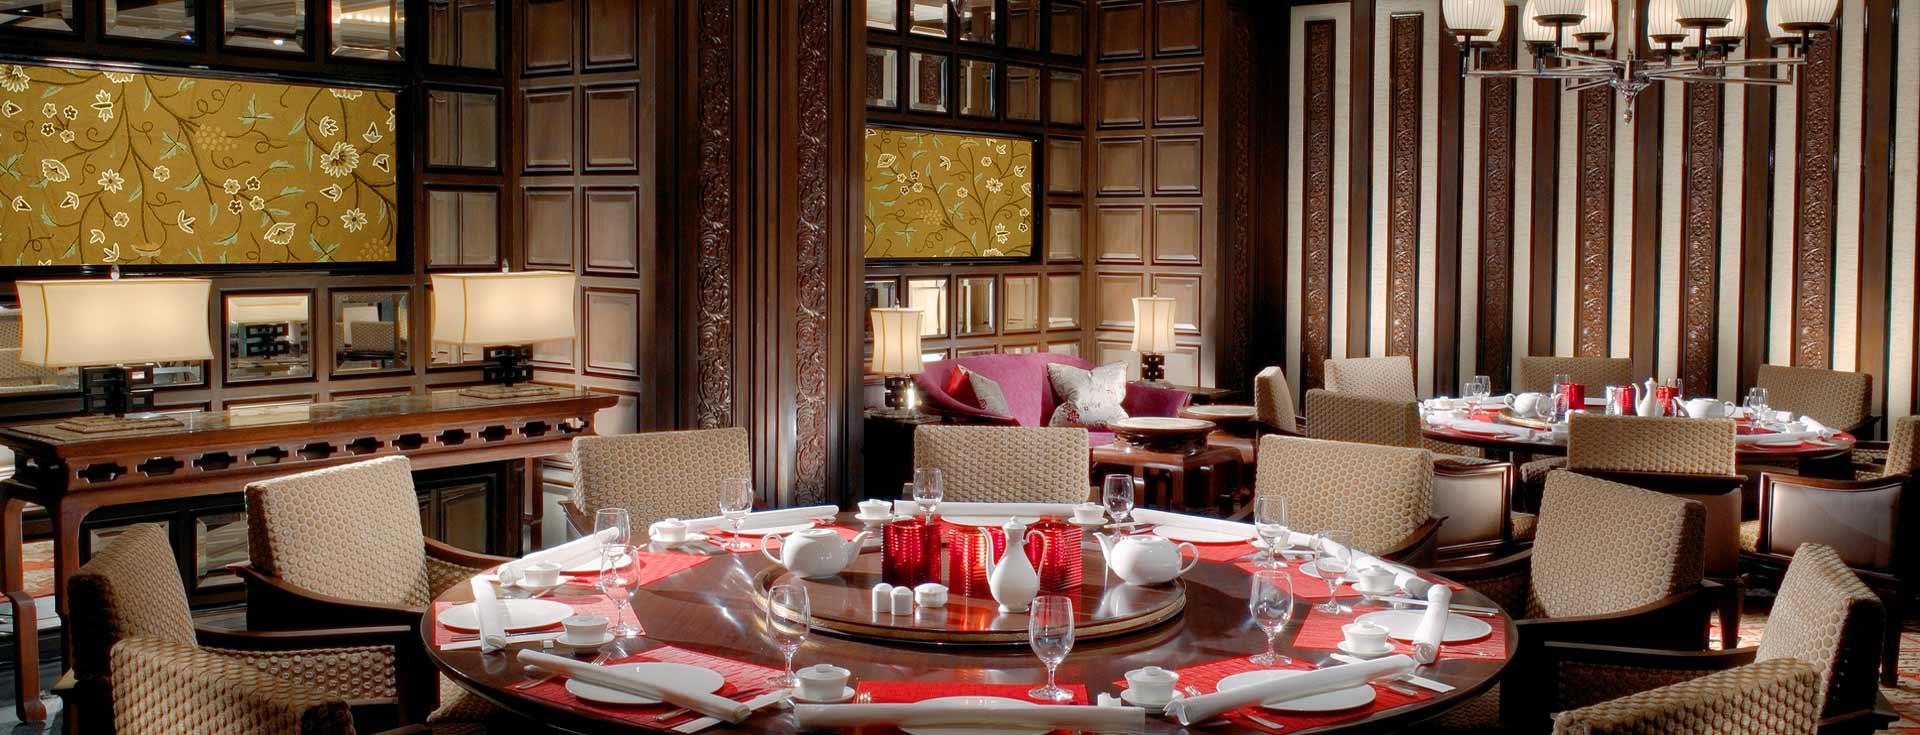 China XO - The Leela Palace Chennai